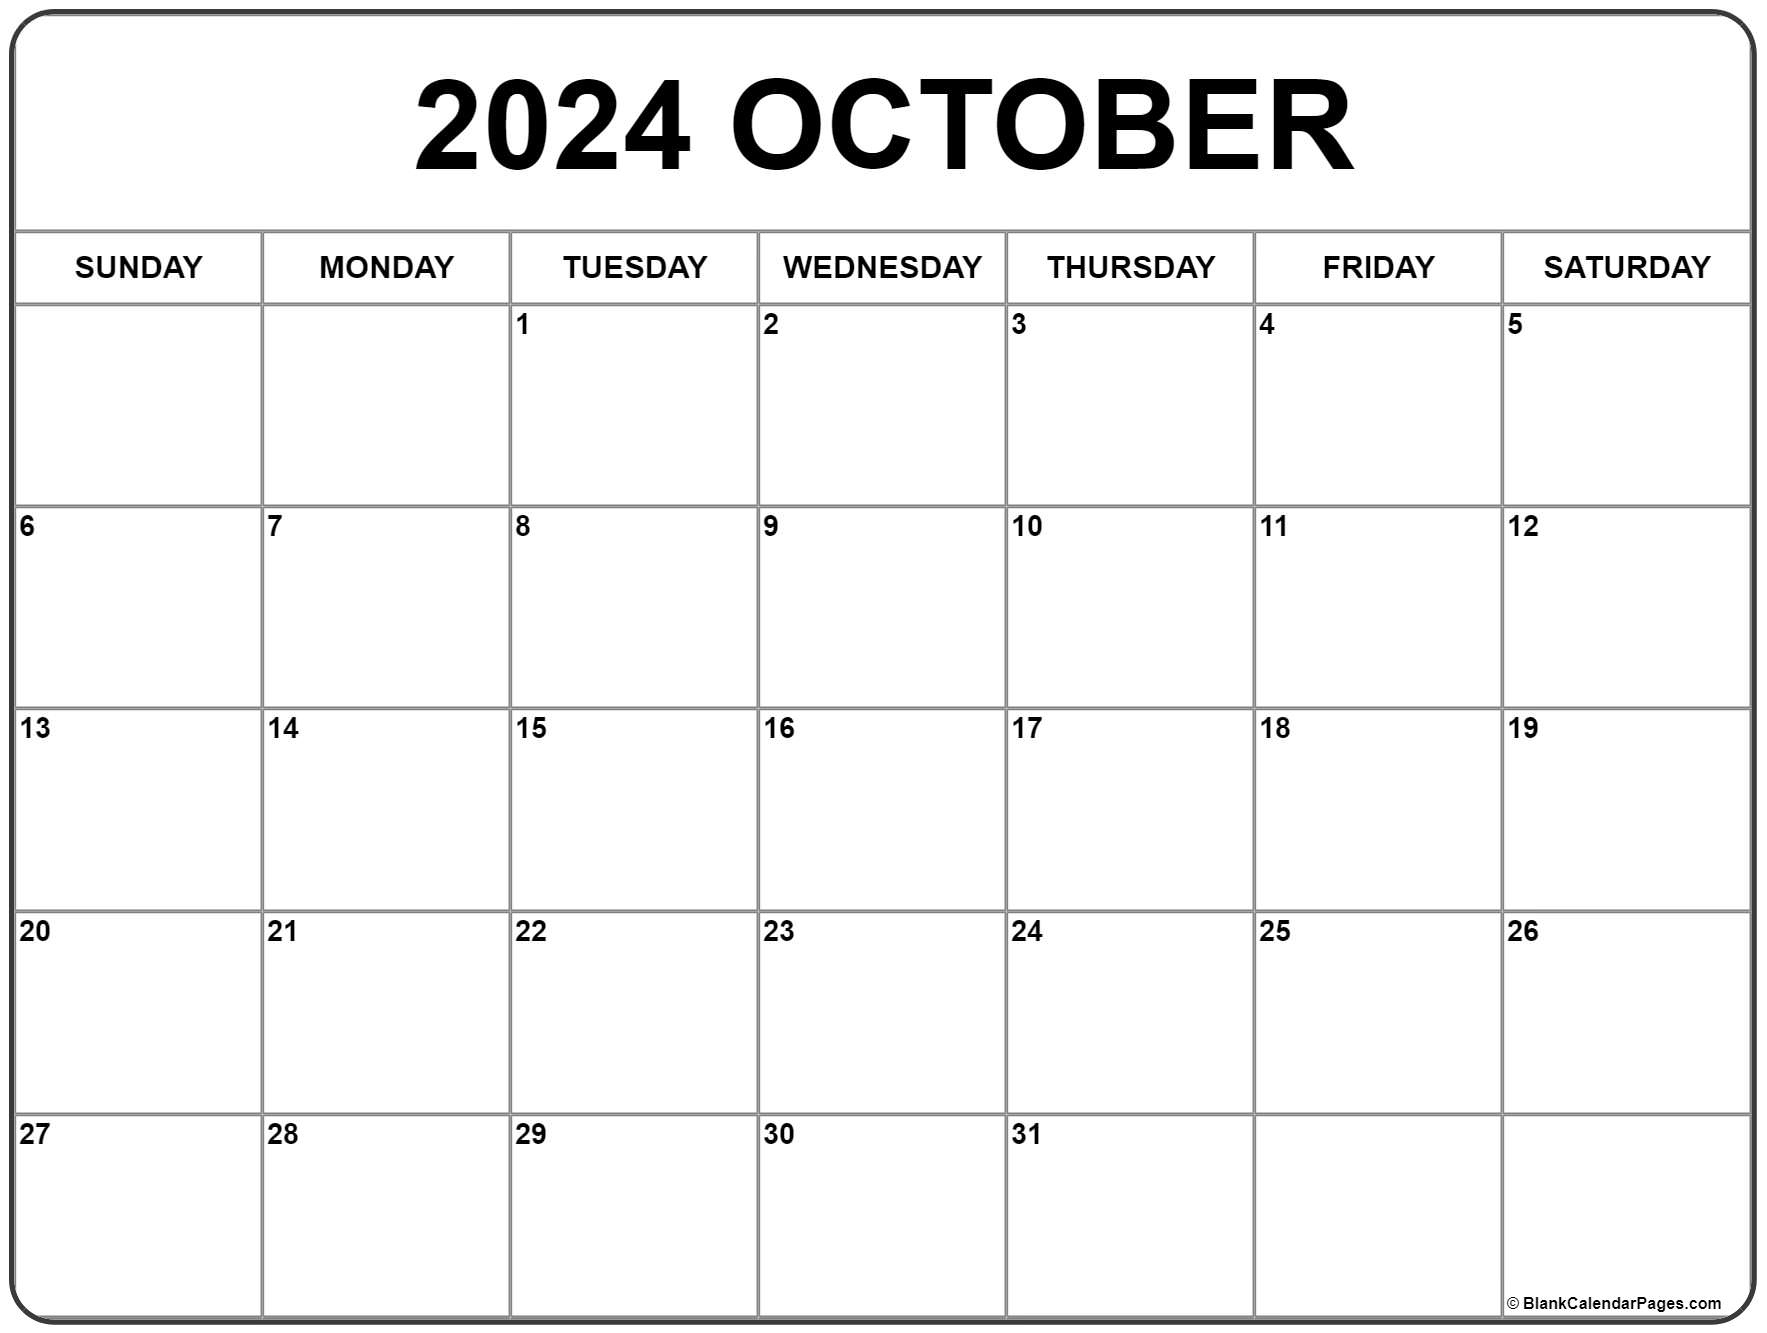 October 2024 Calendar | Free Printable Calendar | Free Printable Calendar October 2024